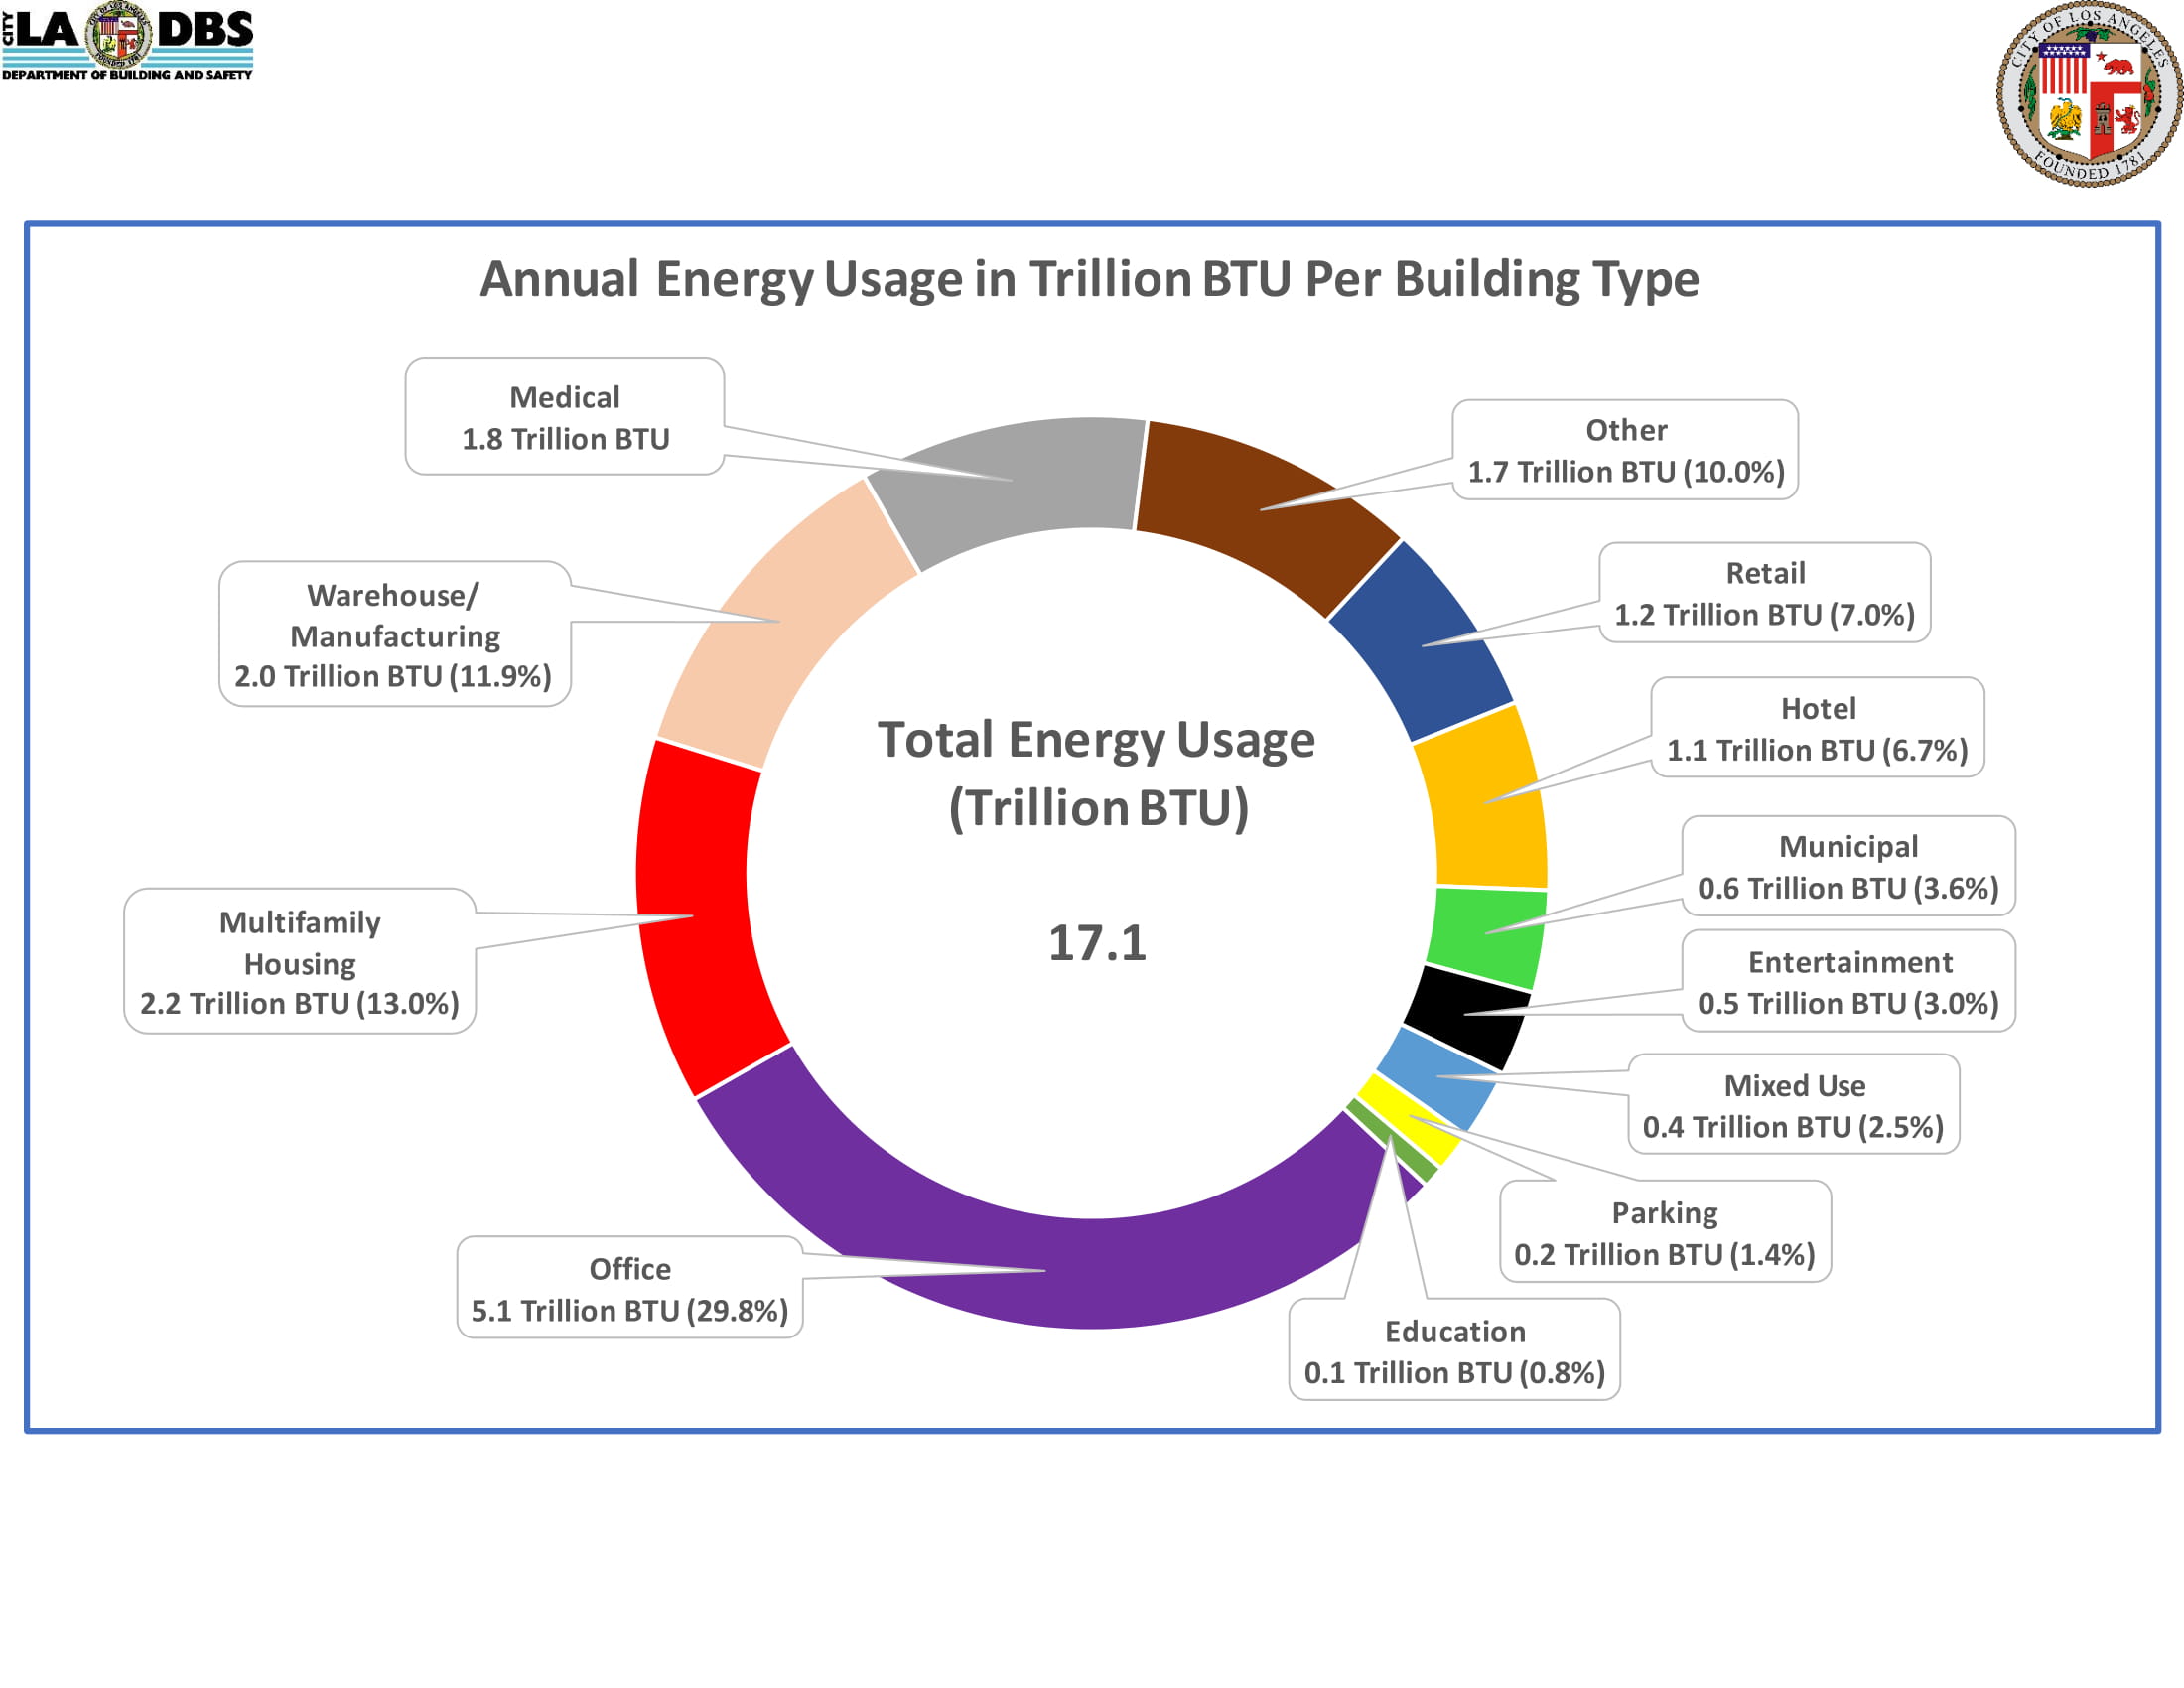 Annual Energy Usage in Trillion BTU Per Building Type